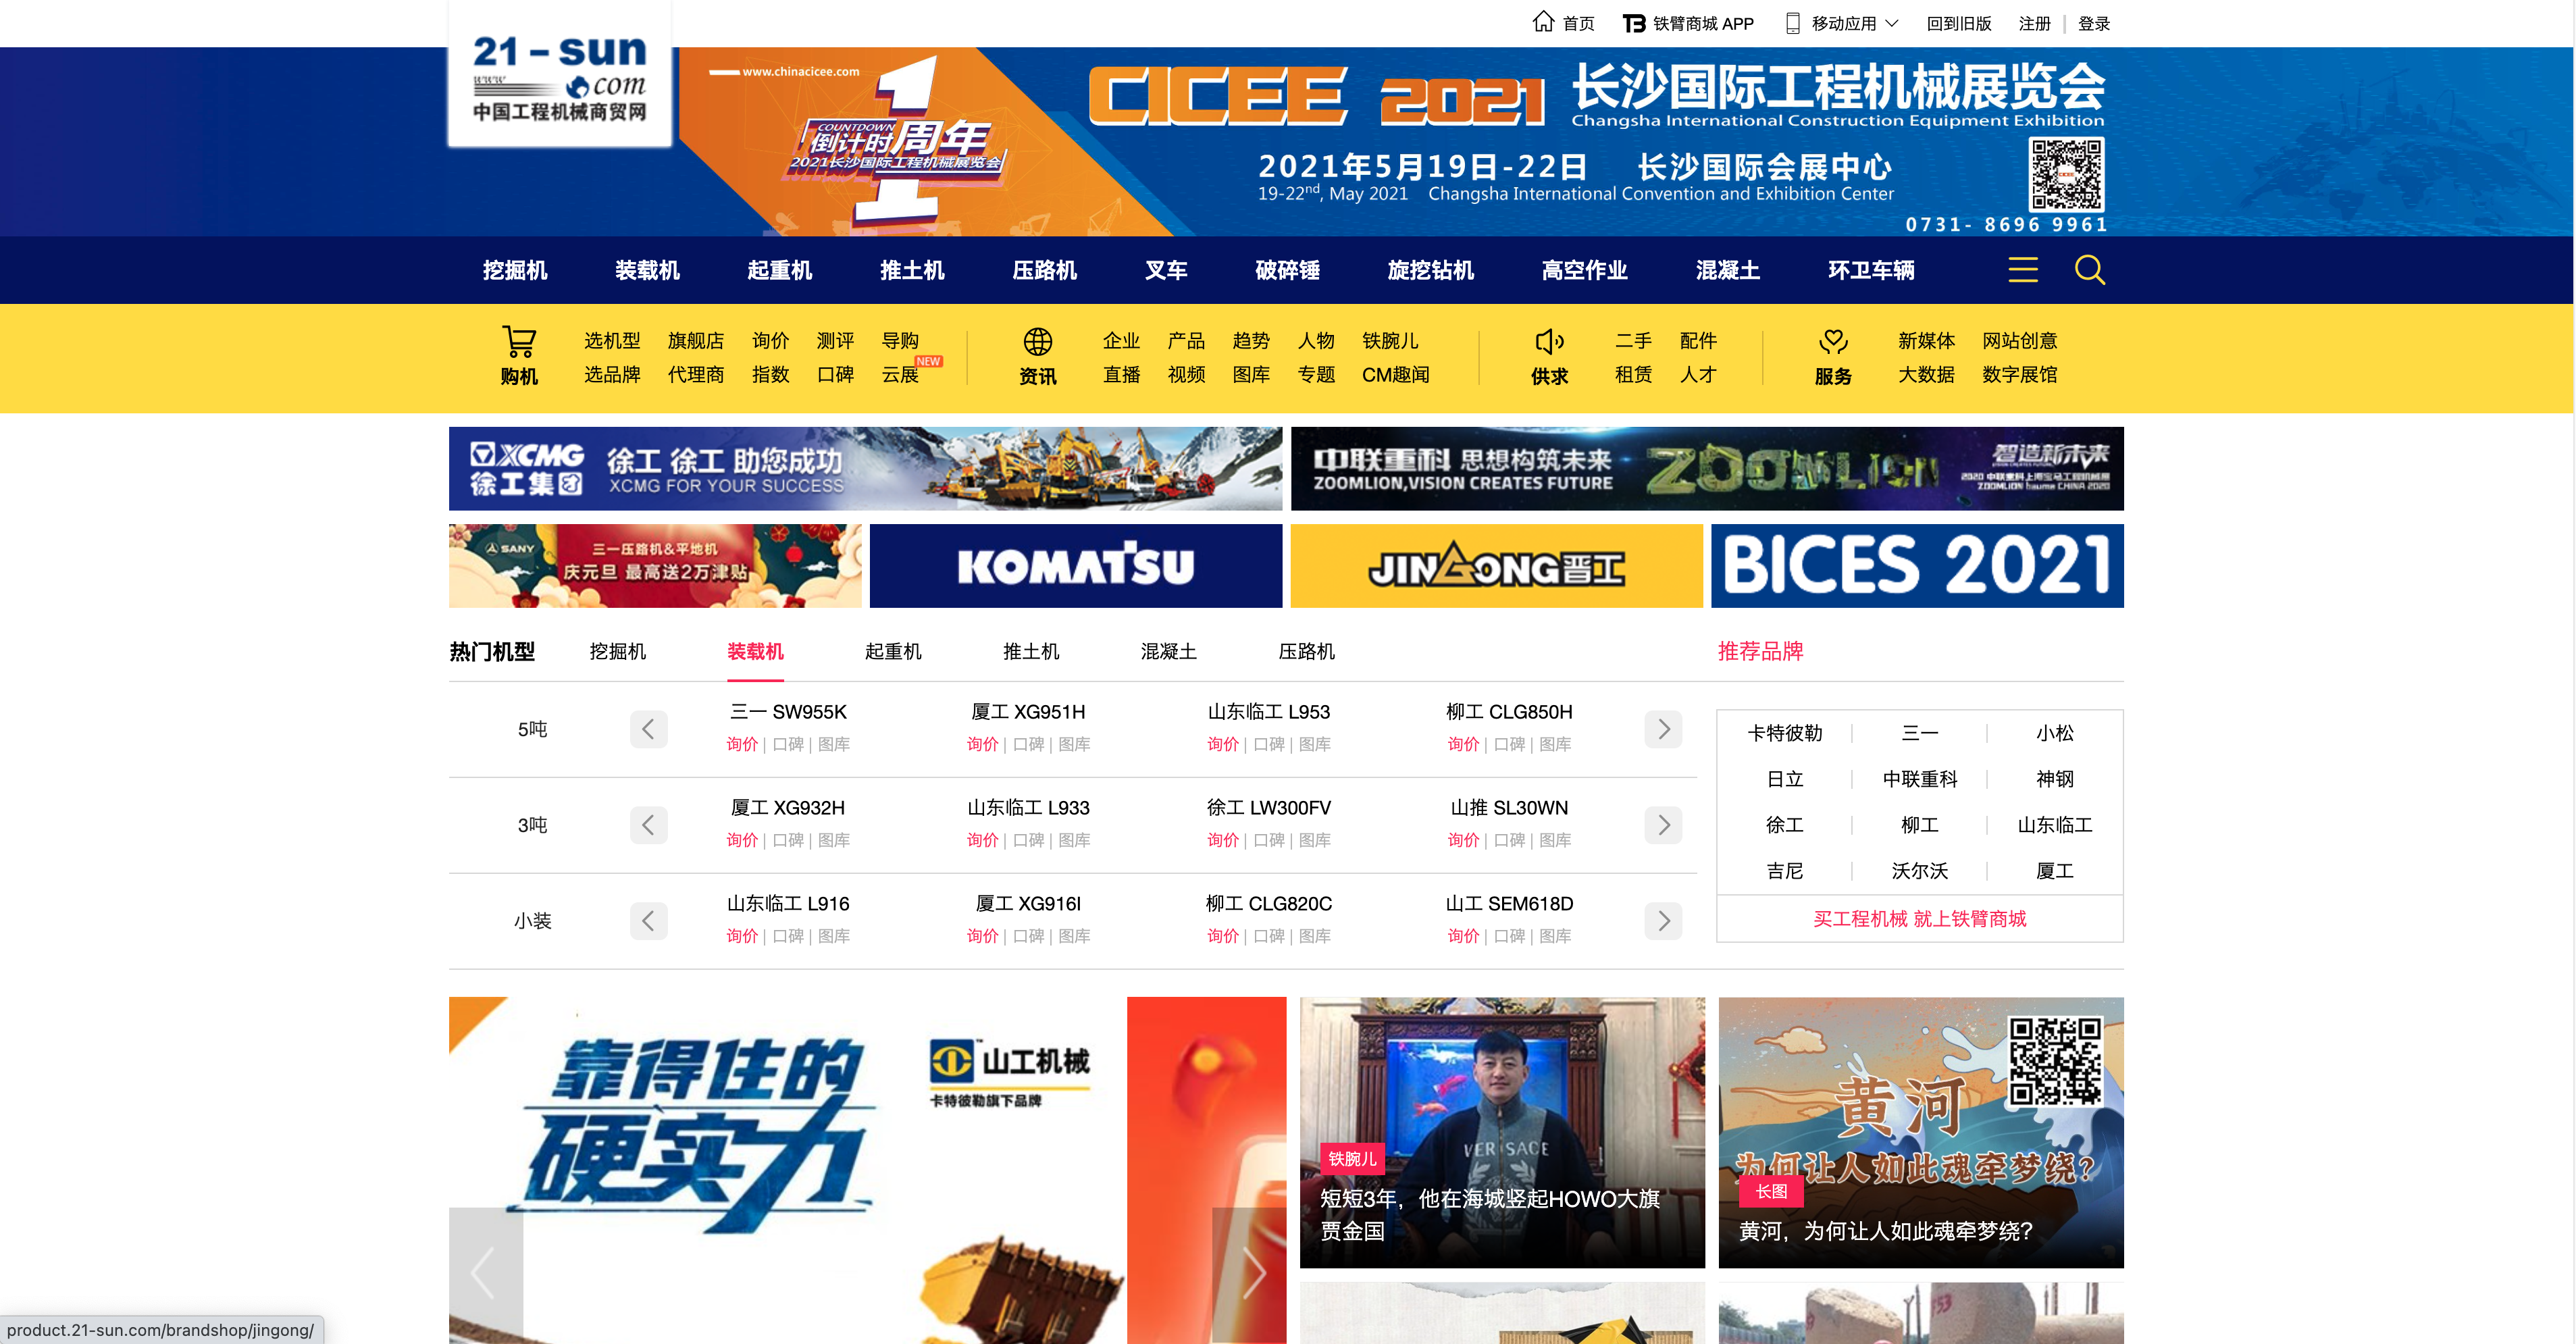 DHgate.com: 思齐（中国）有限公司旗下的全球B2B电商平台 